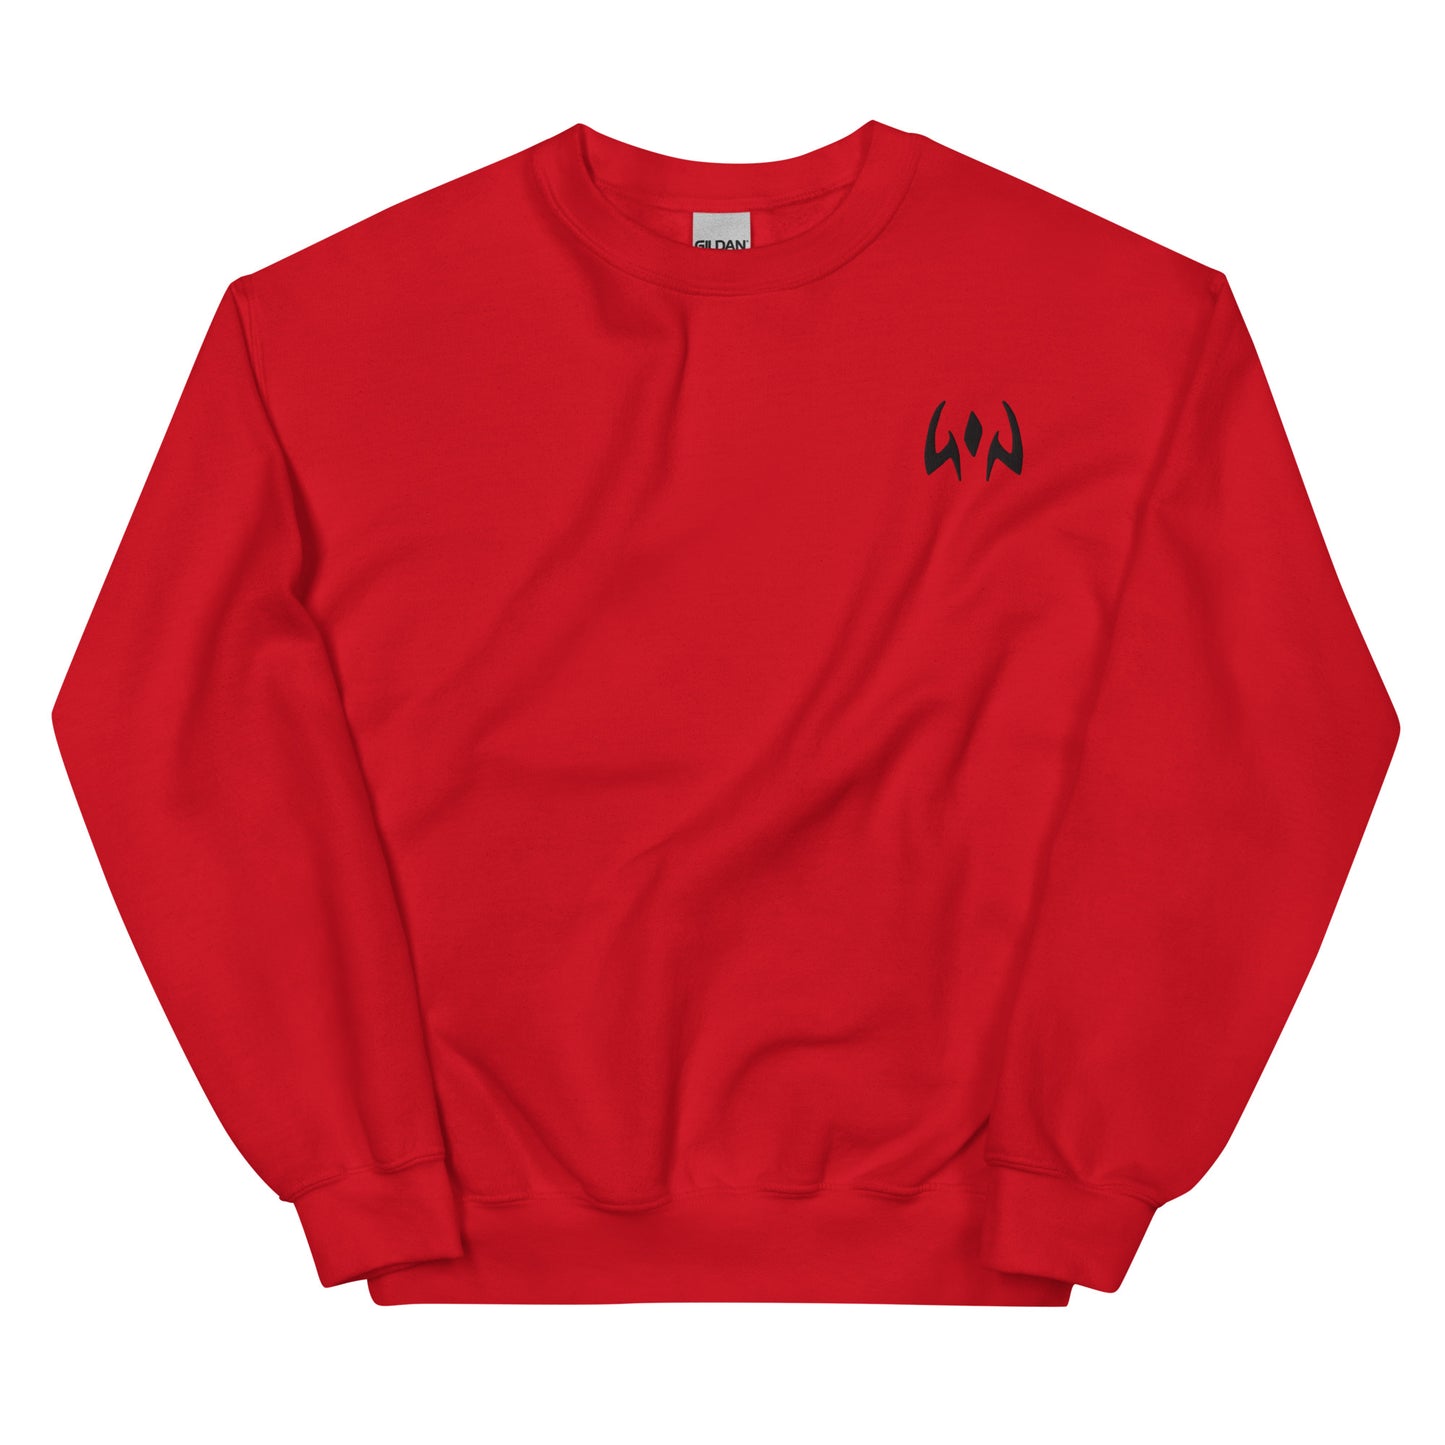 Curse marks sweater Sweatshirt jumper Embroidered